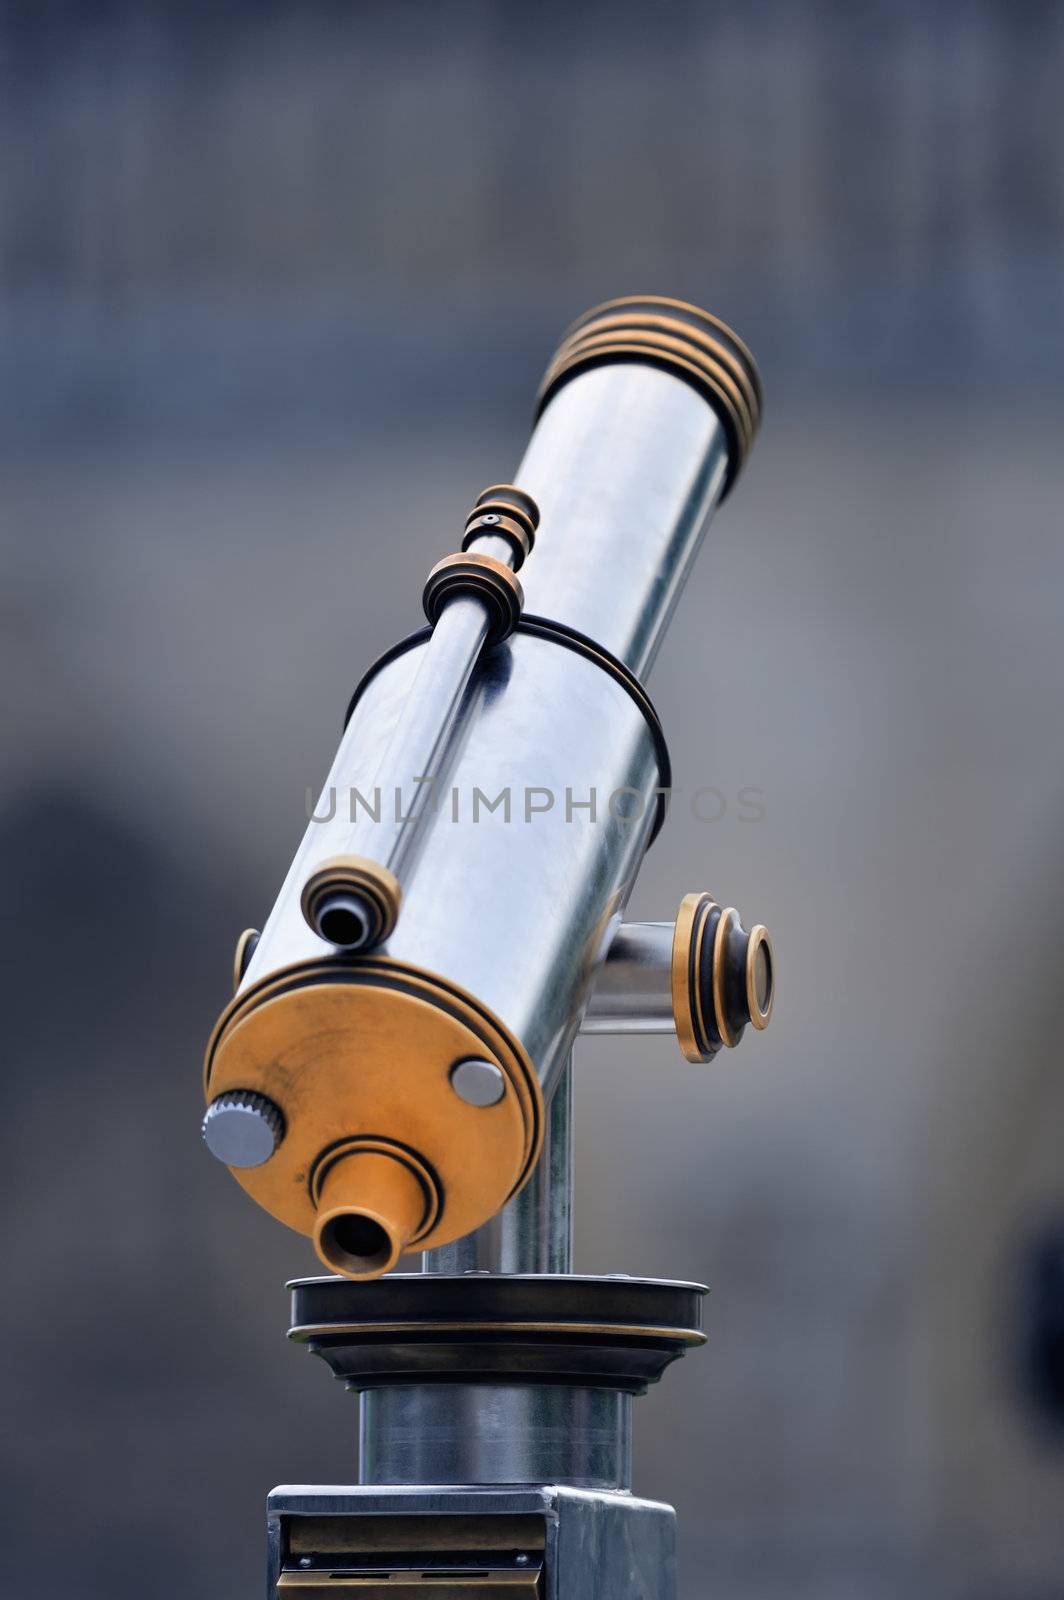 An tourist type telescope on the blur background